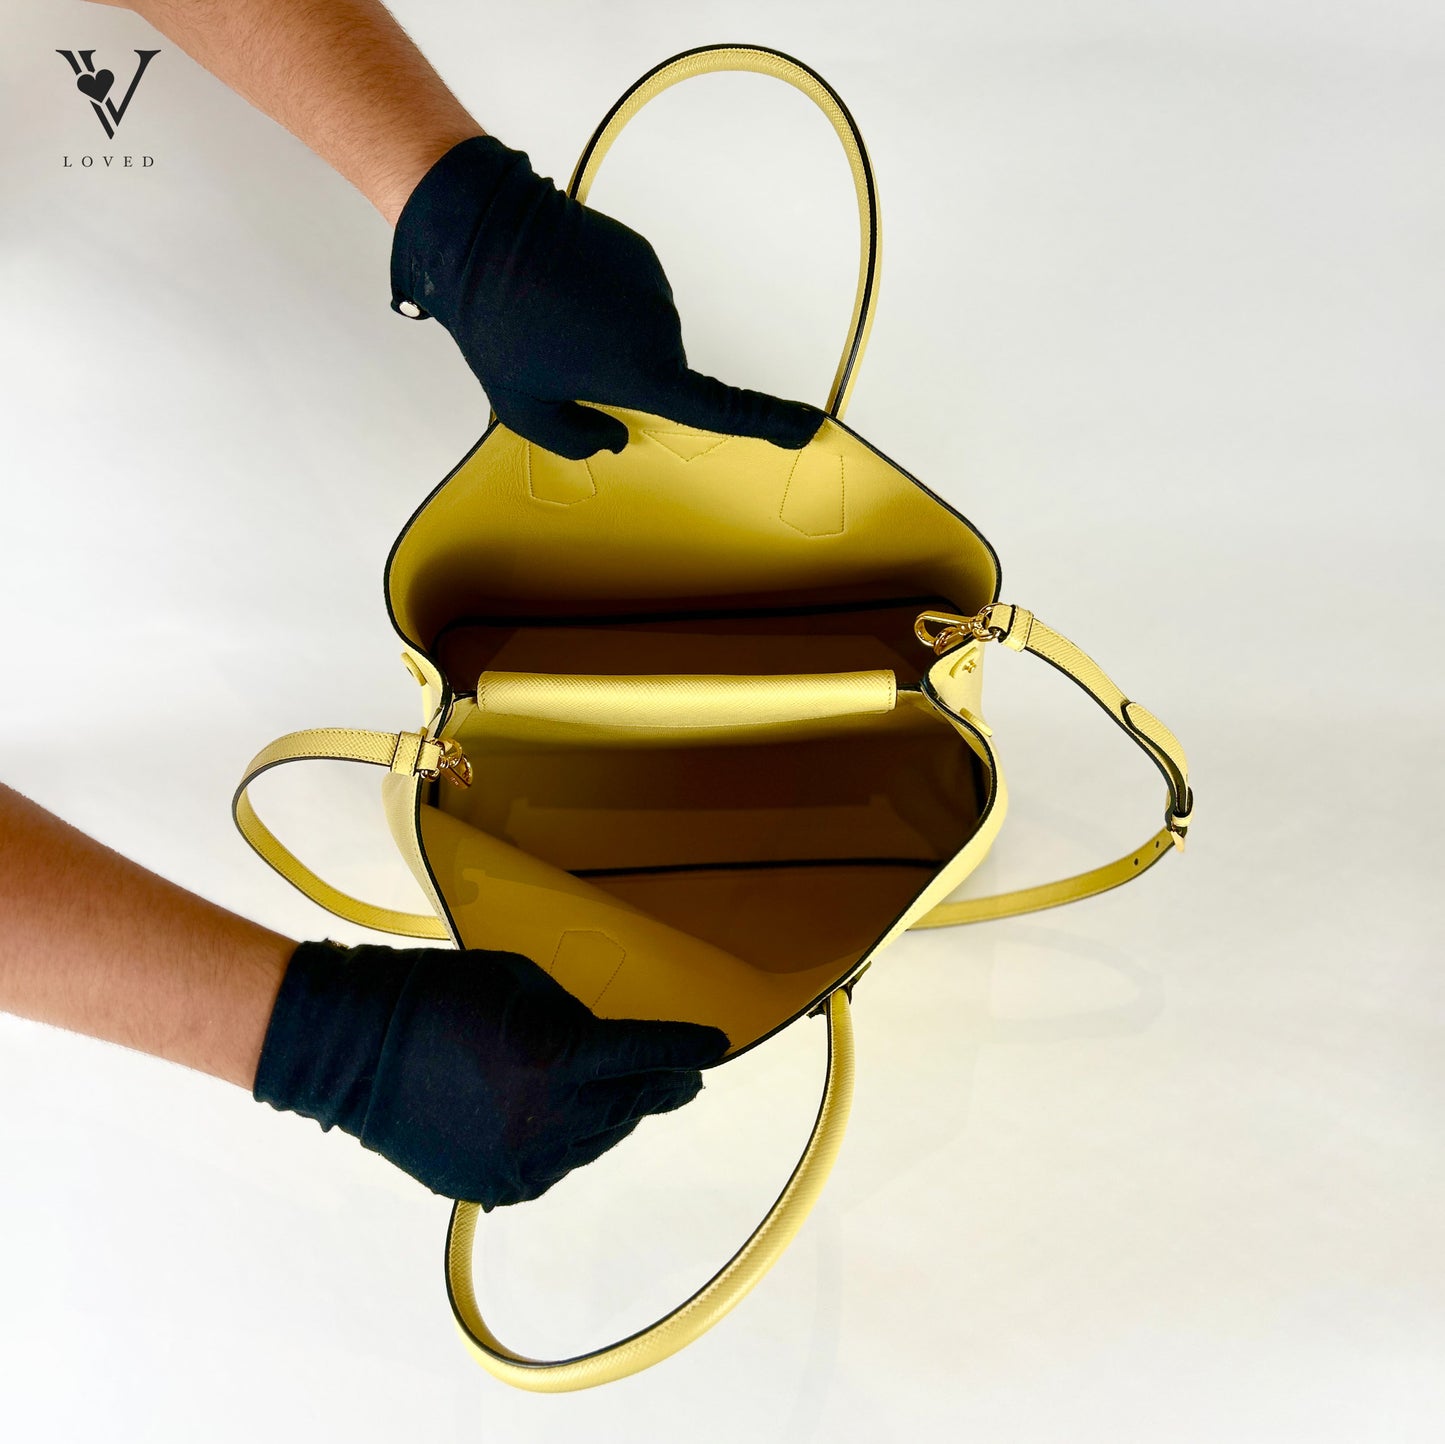 Prada Sunny Yellow Double Saffiano Leather Bag